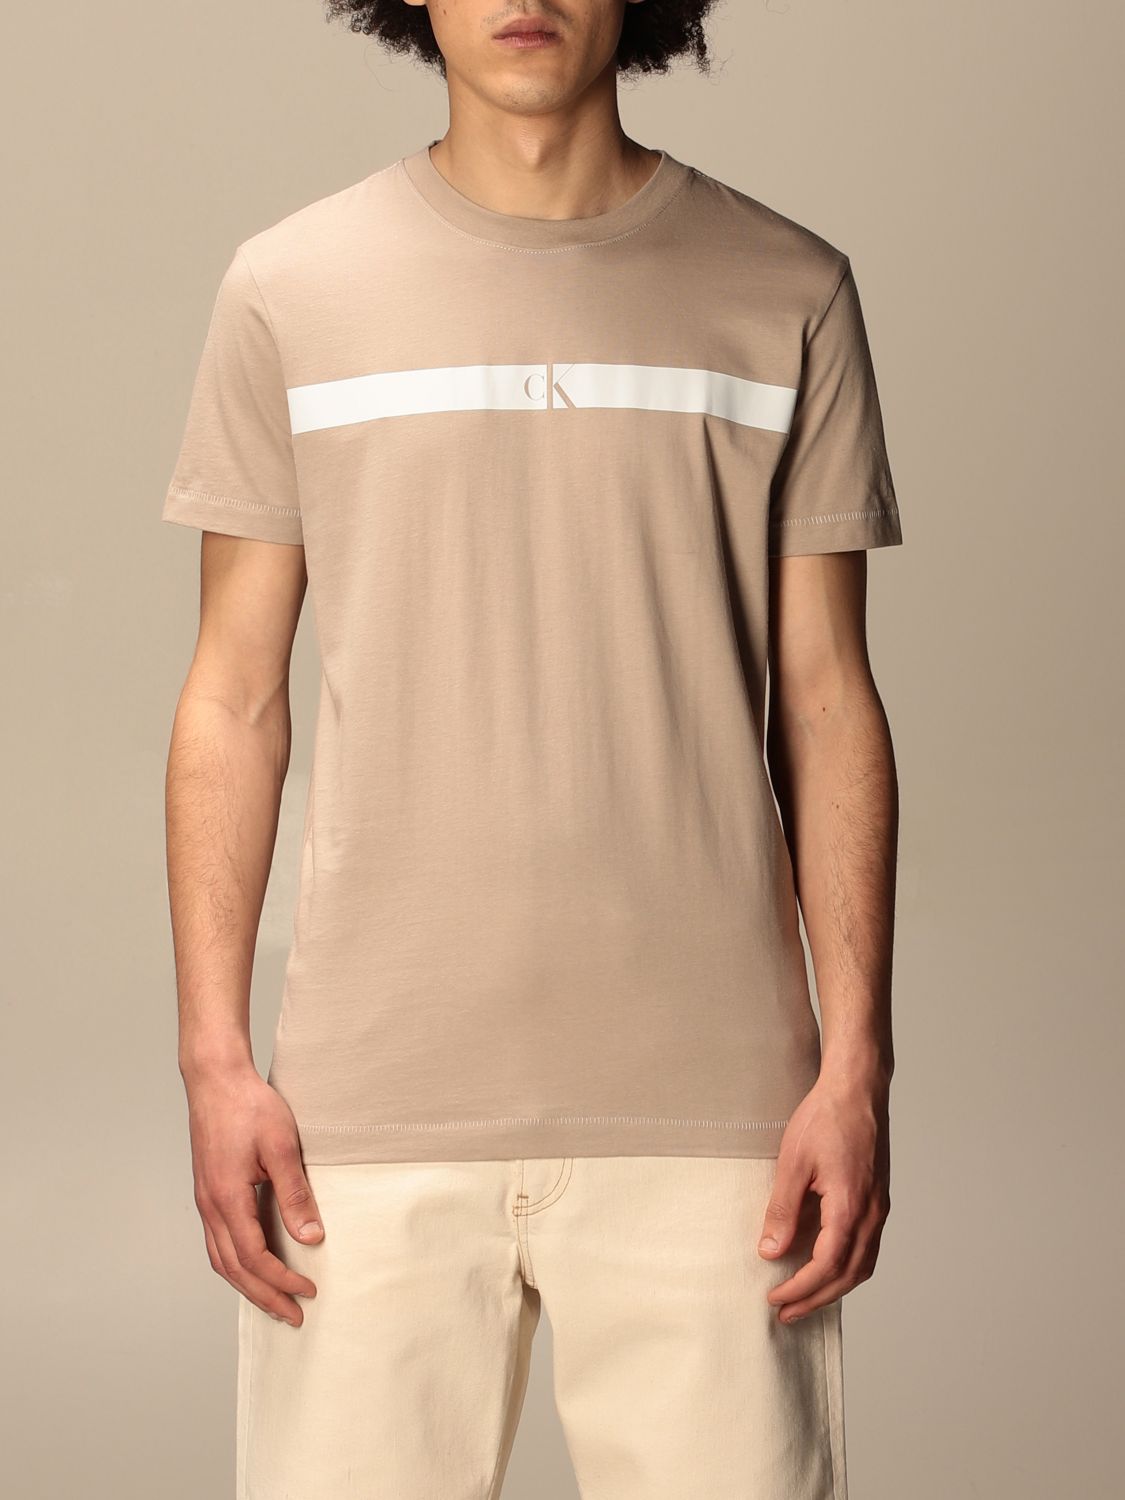 CALVIN KLEIN JEANS: T-shirt with logo - Beige | Calvin Klein Jeans t-shirt  J30J317165 online on 